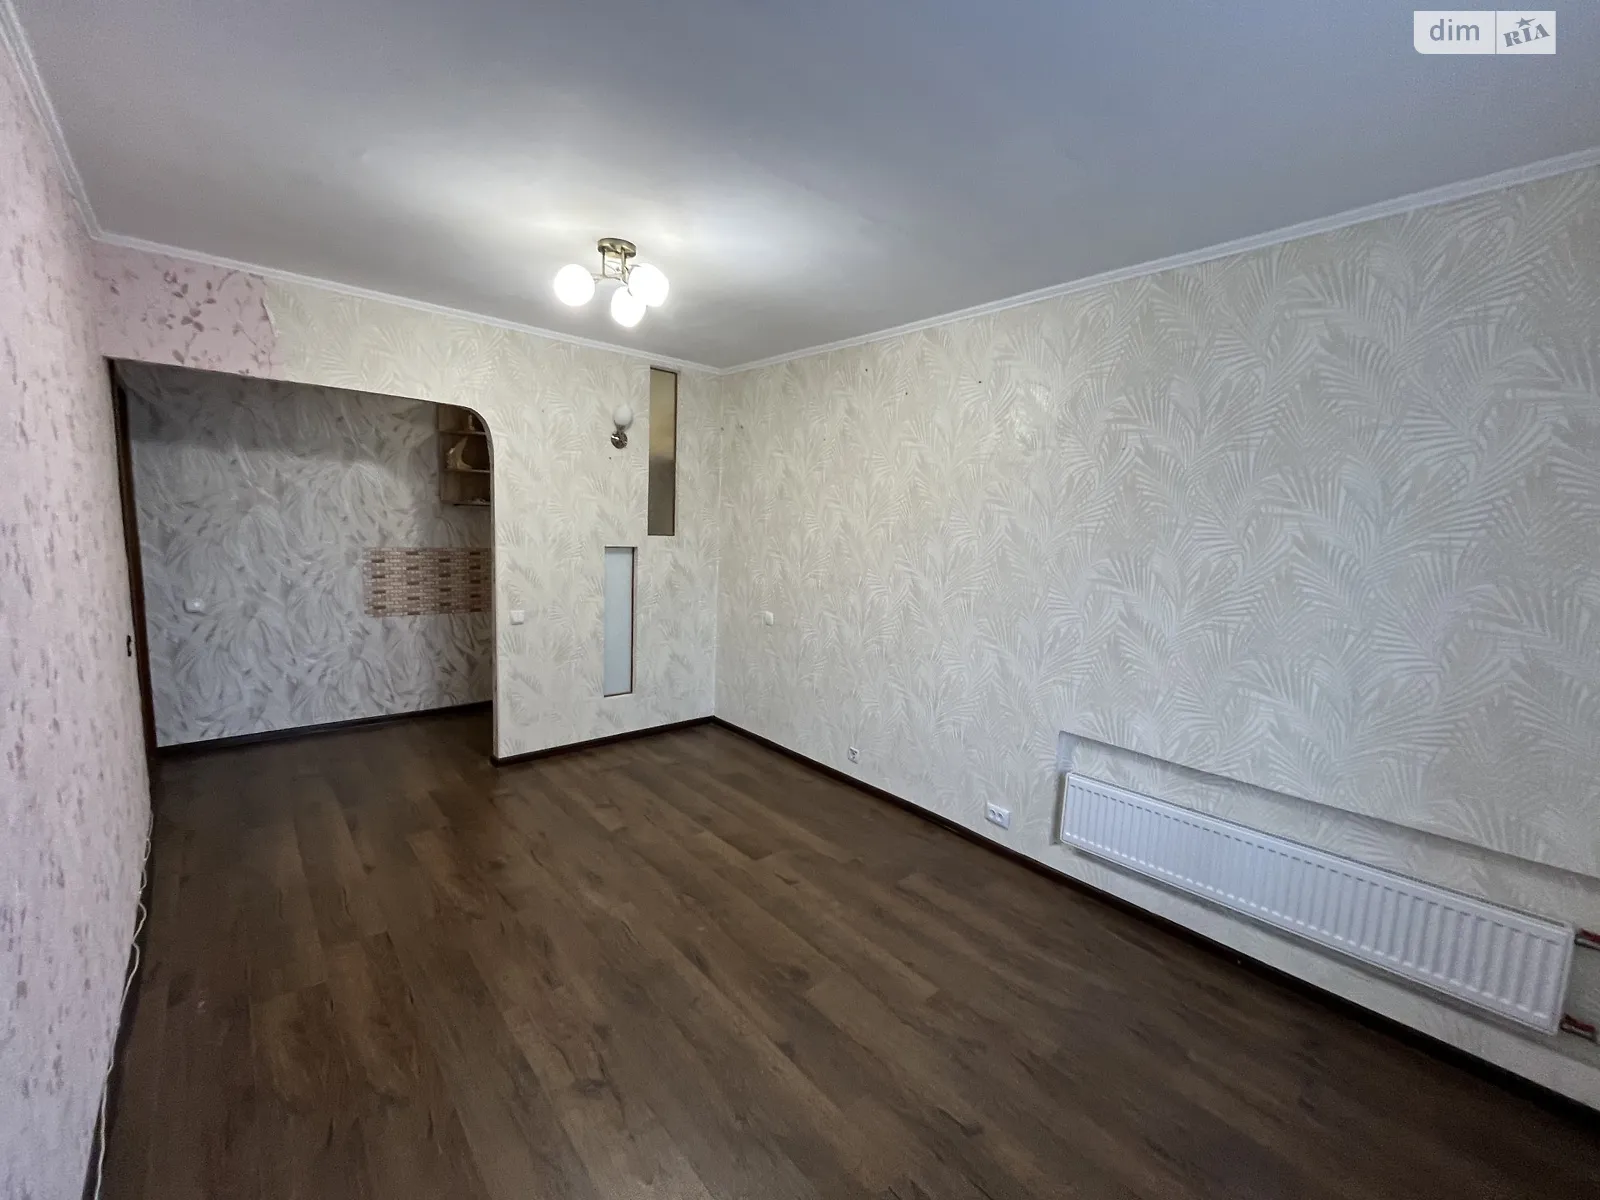 Продается комната 25 кв. м в Киеве, цена: 17500 $ - фото 1